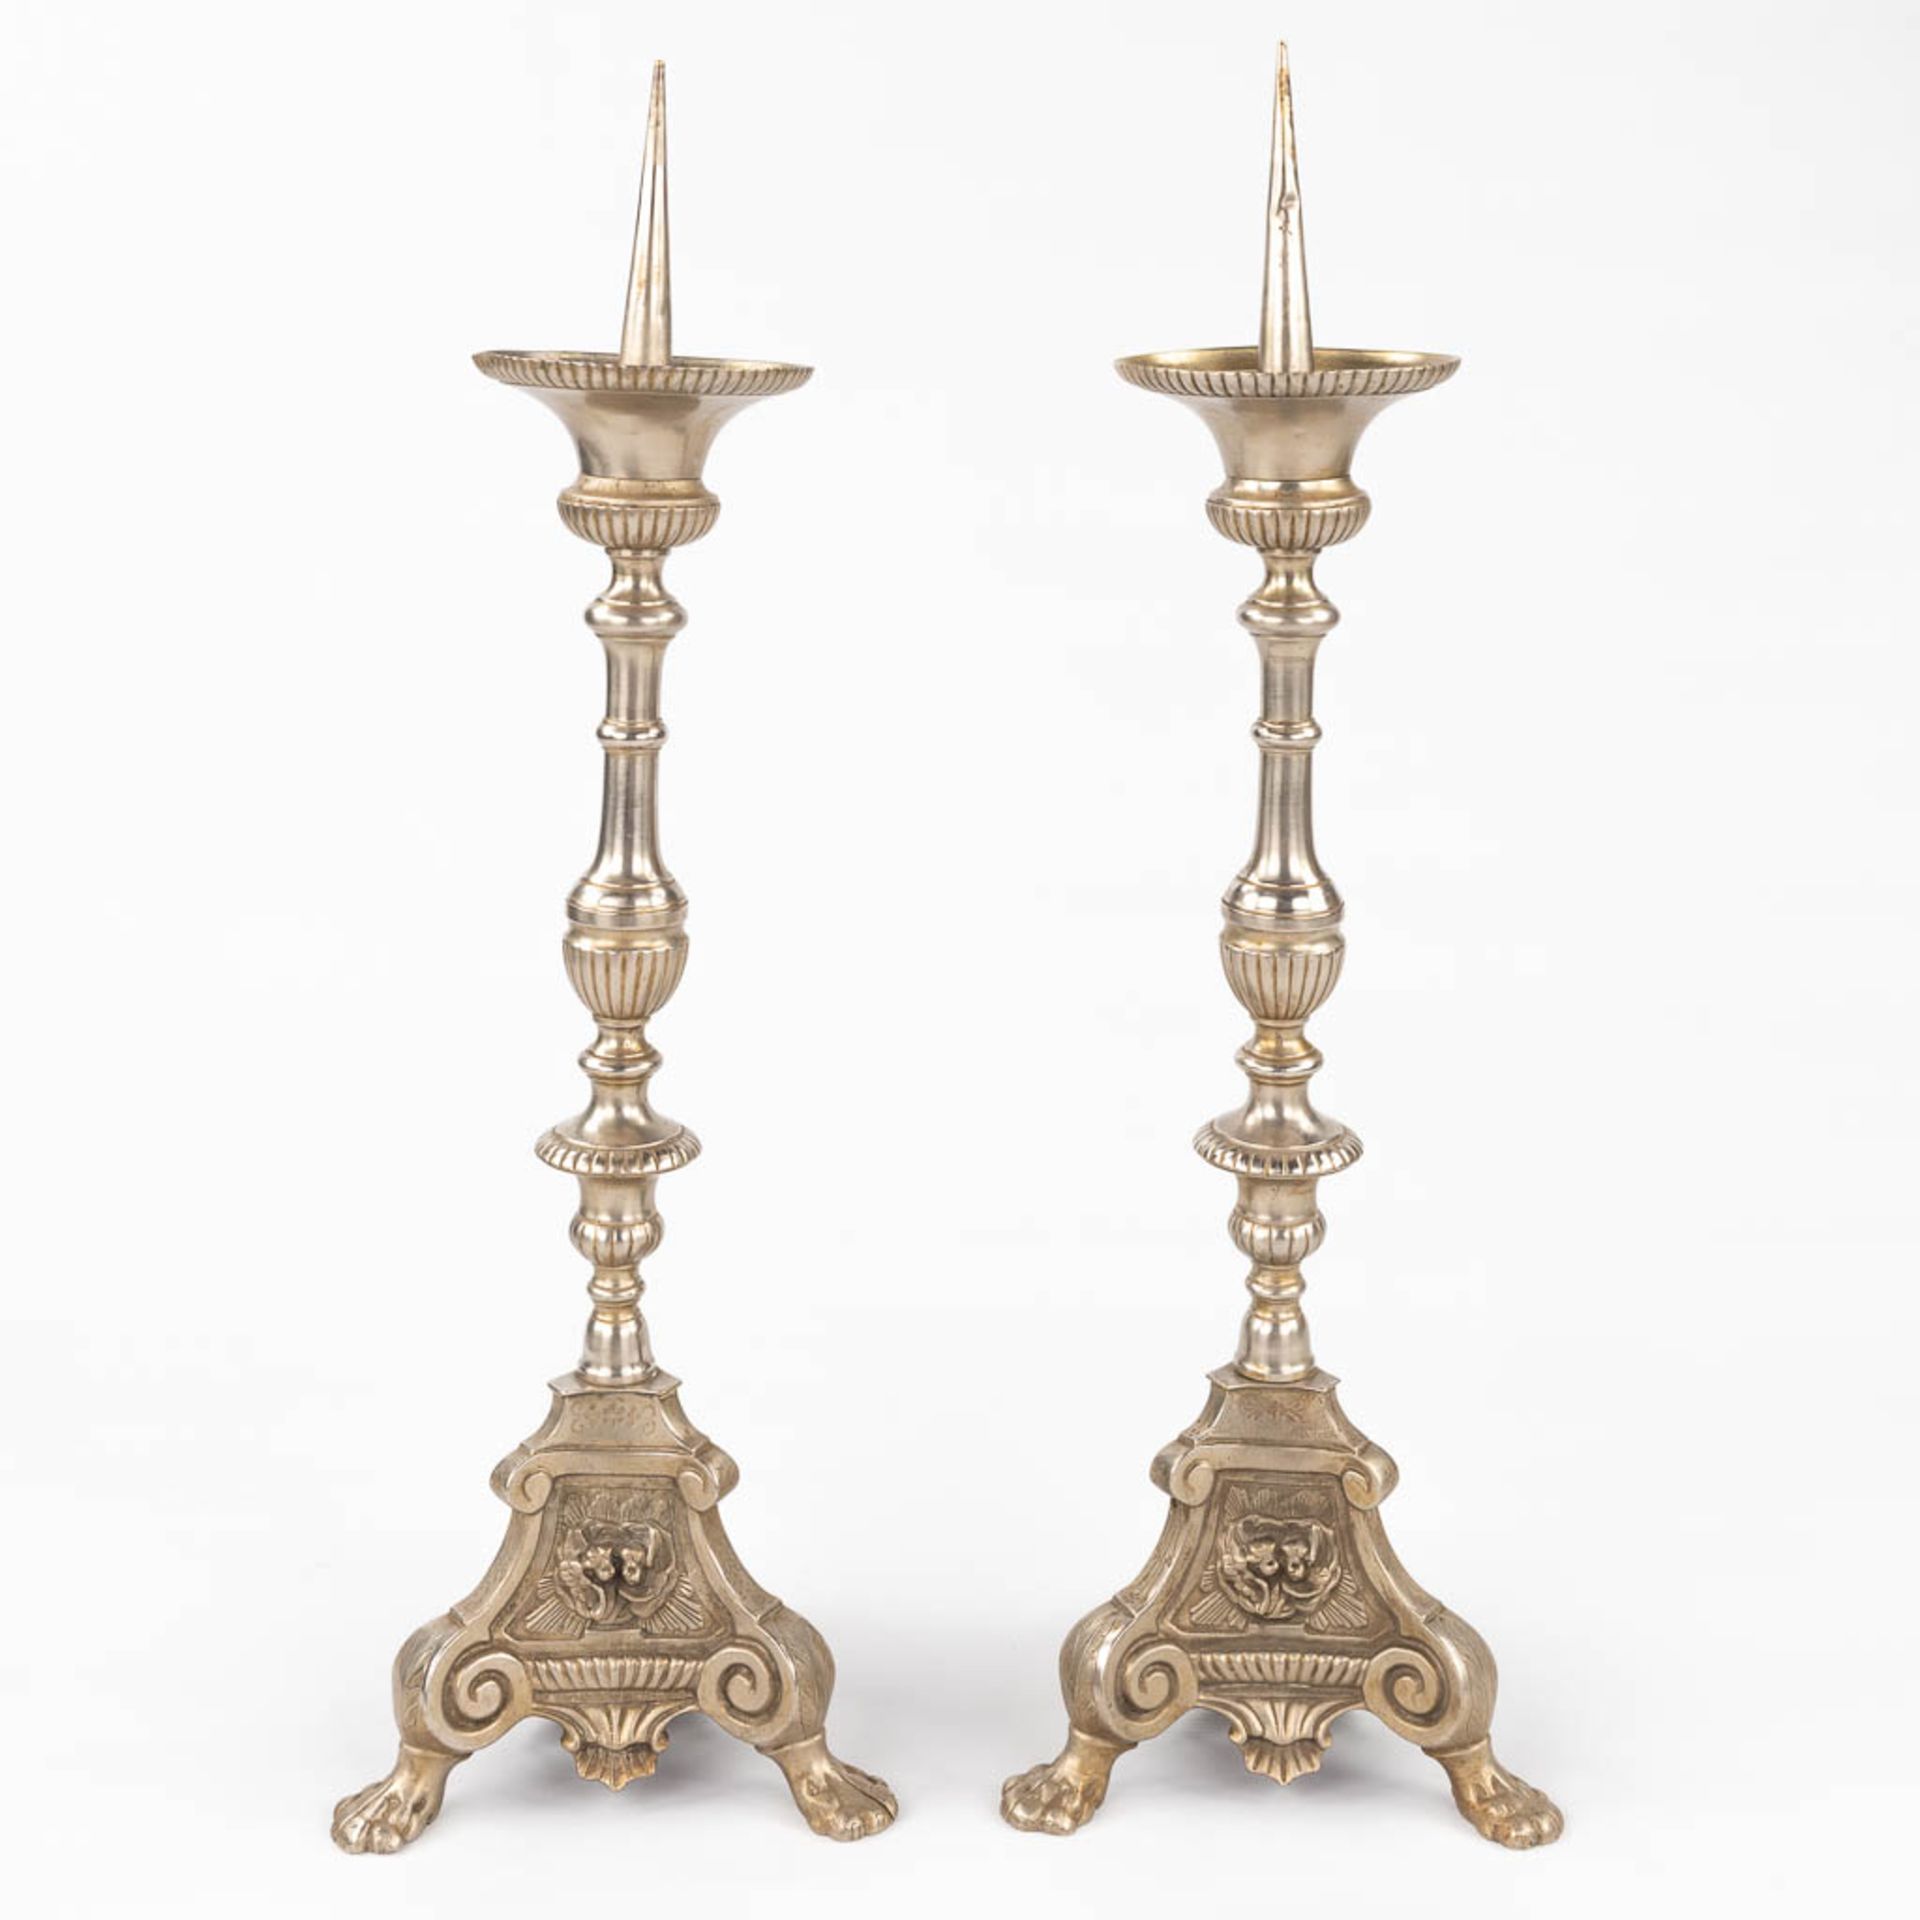 A pair of silver-plated church candlesticks. (H:70 cm)